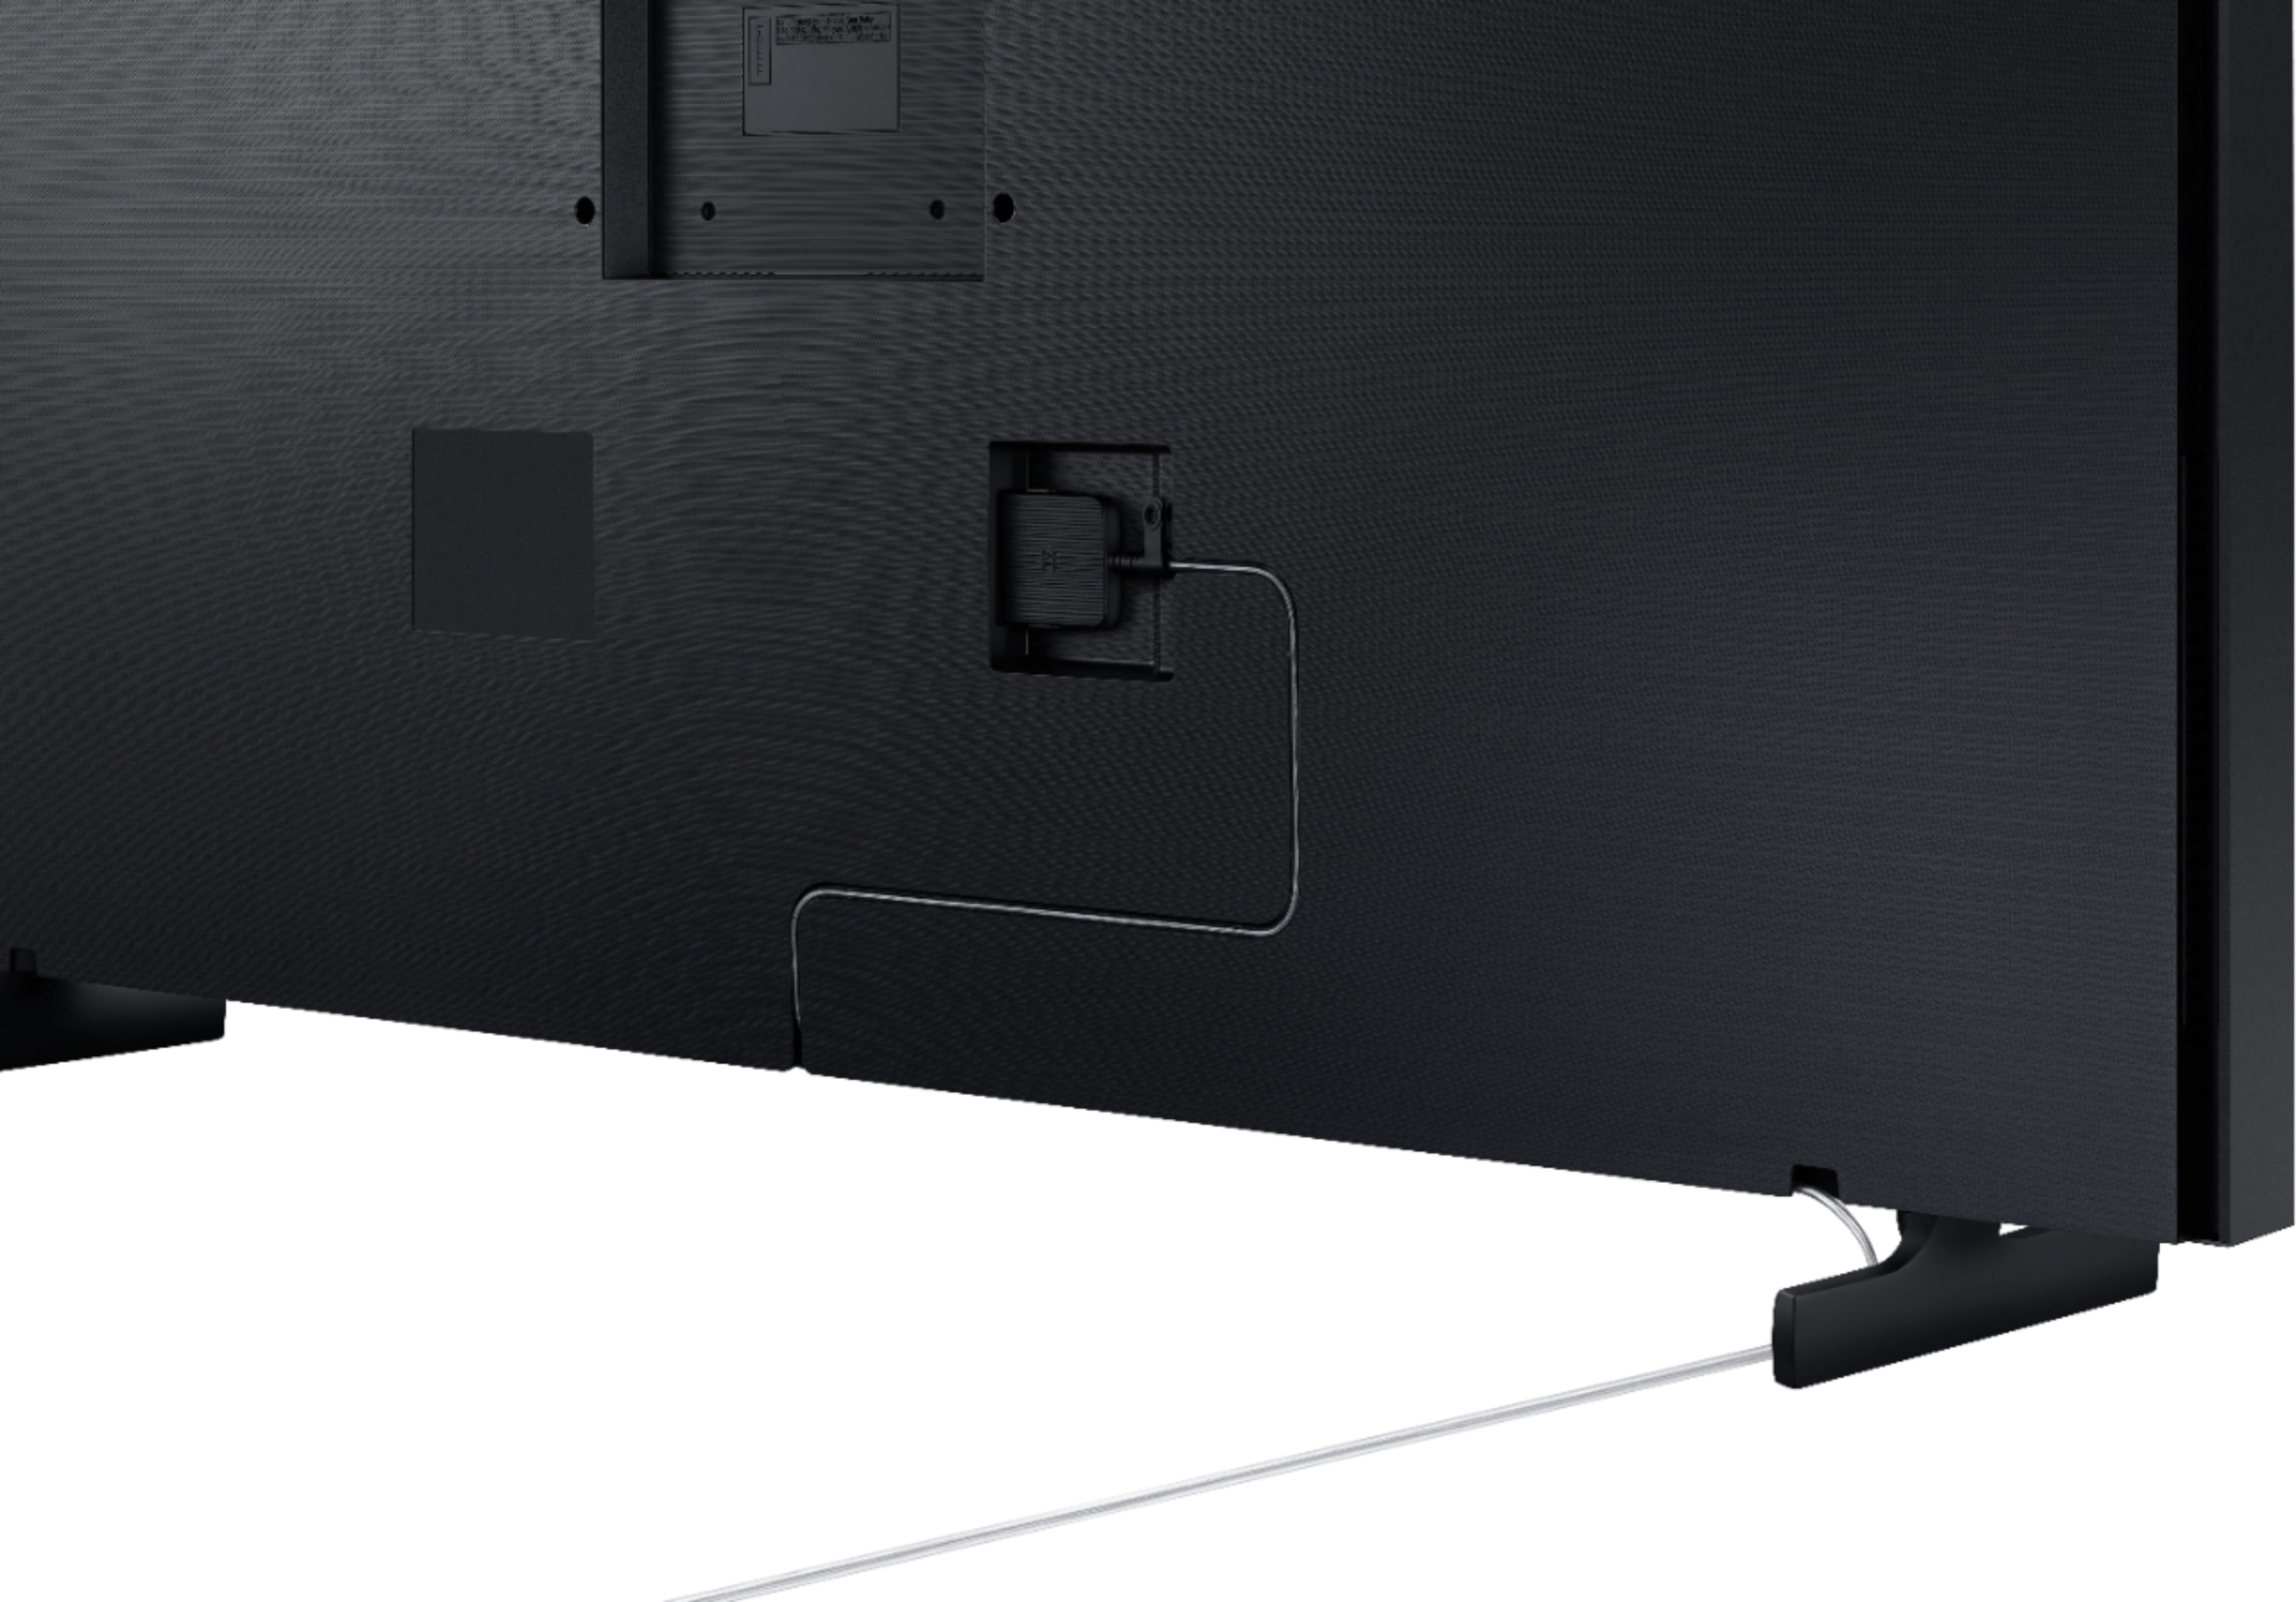 Back View: Samsung - 43" Class The Frame Series LED 4K UHD Smart Tizen TV